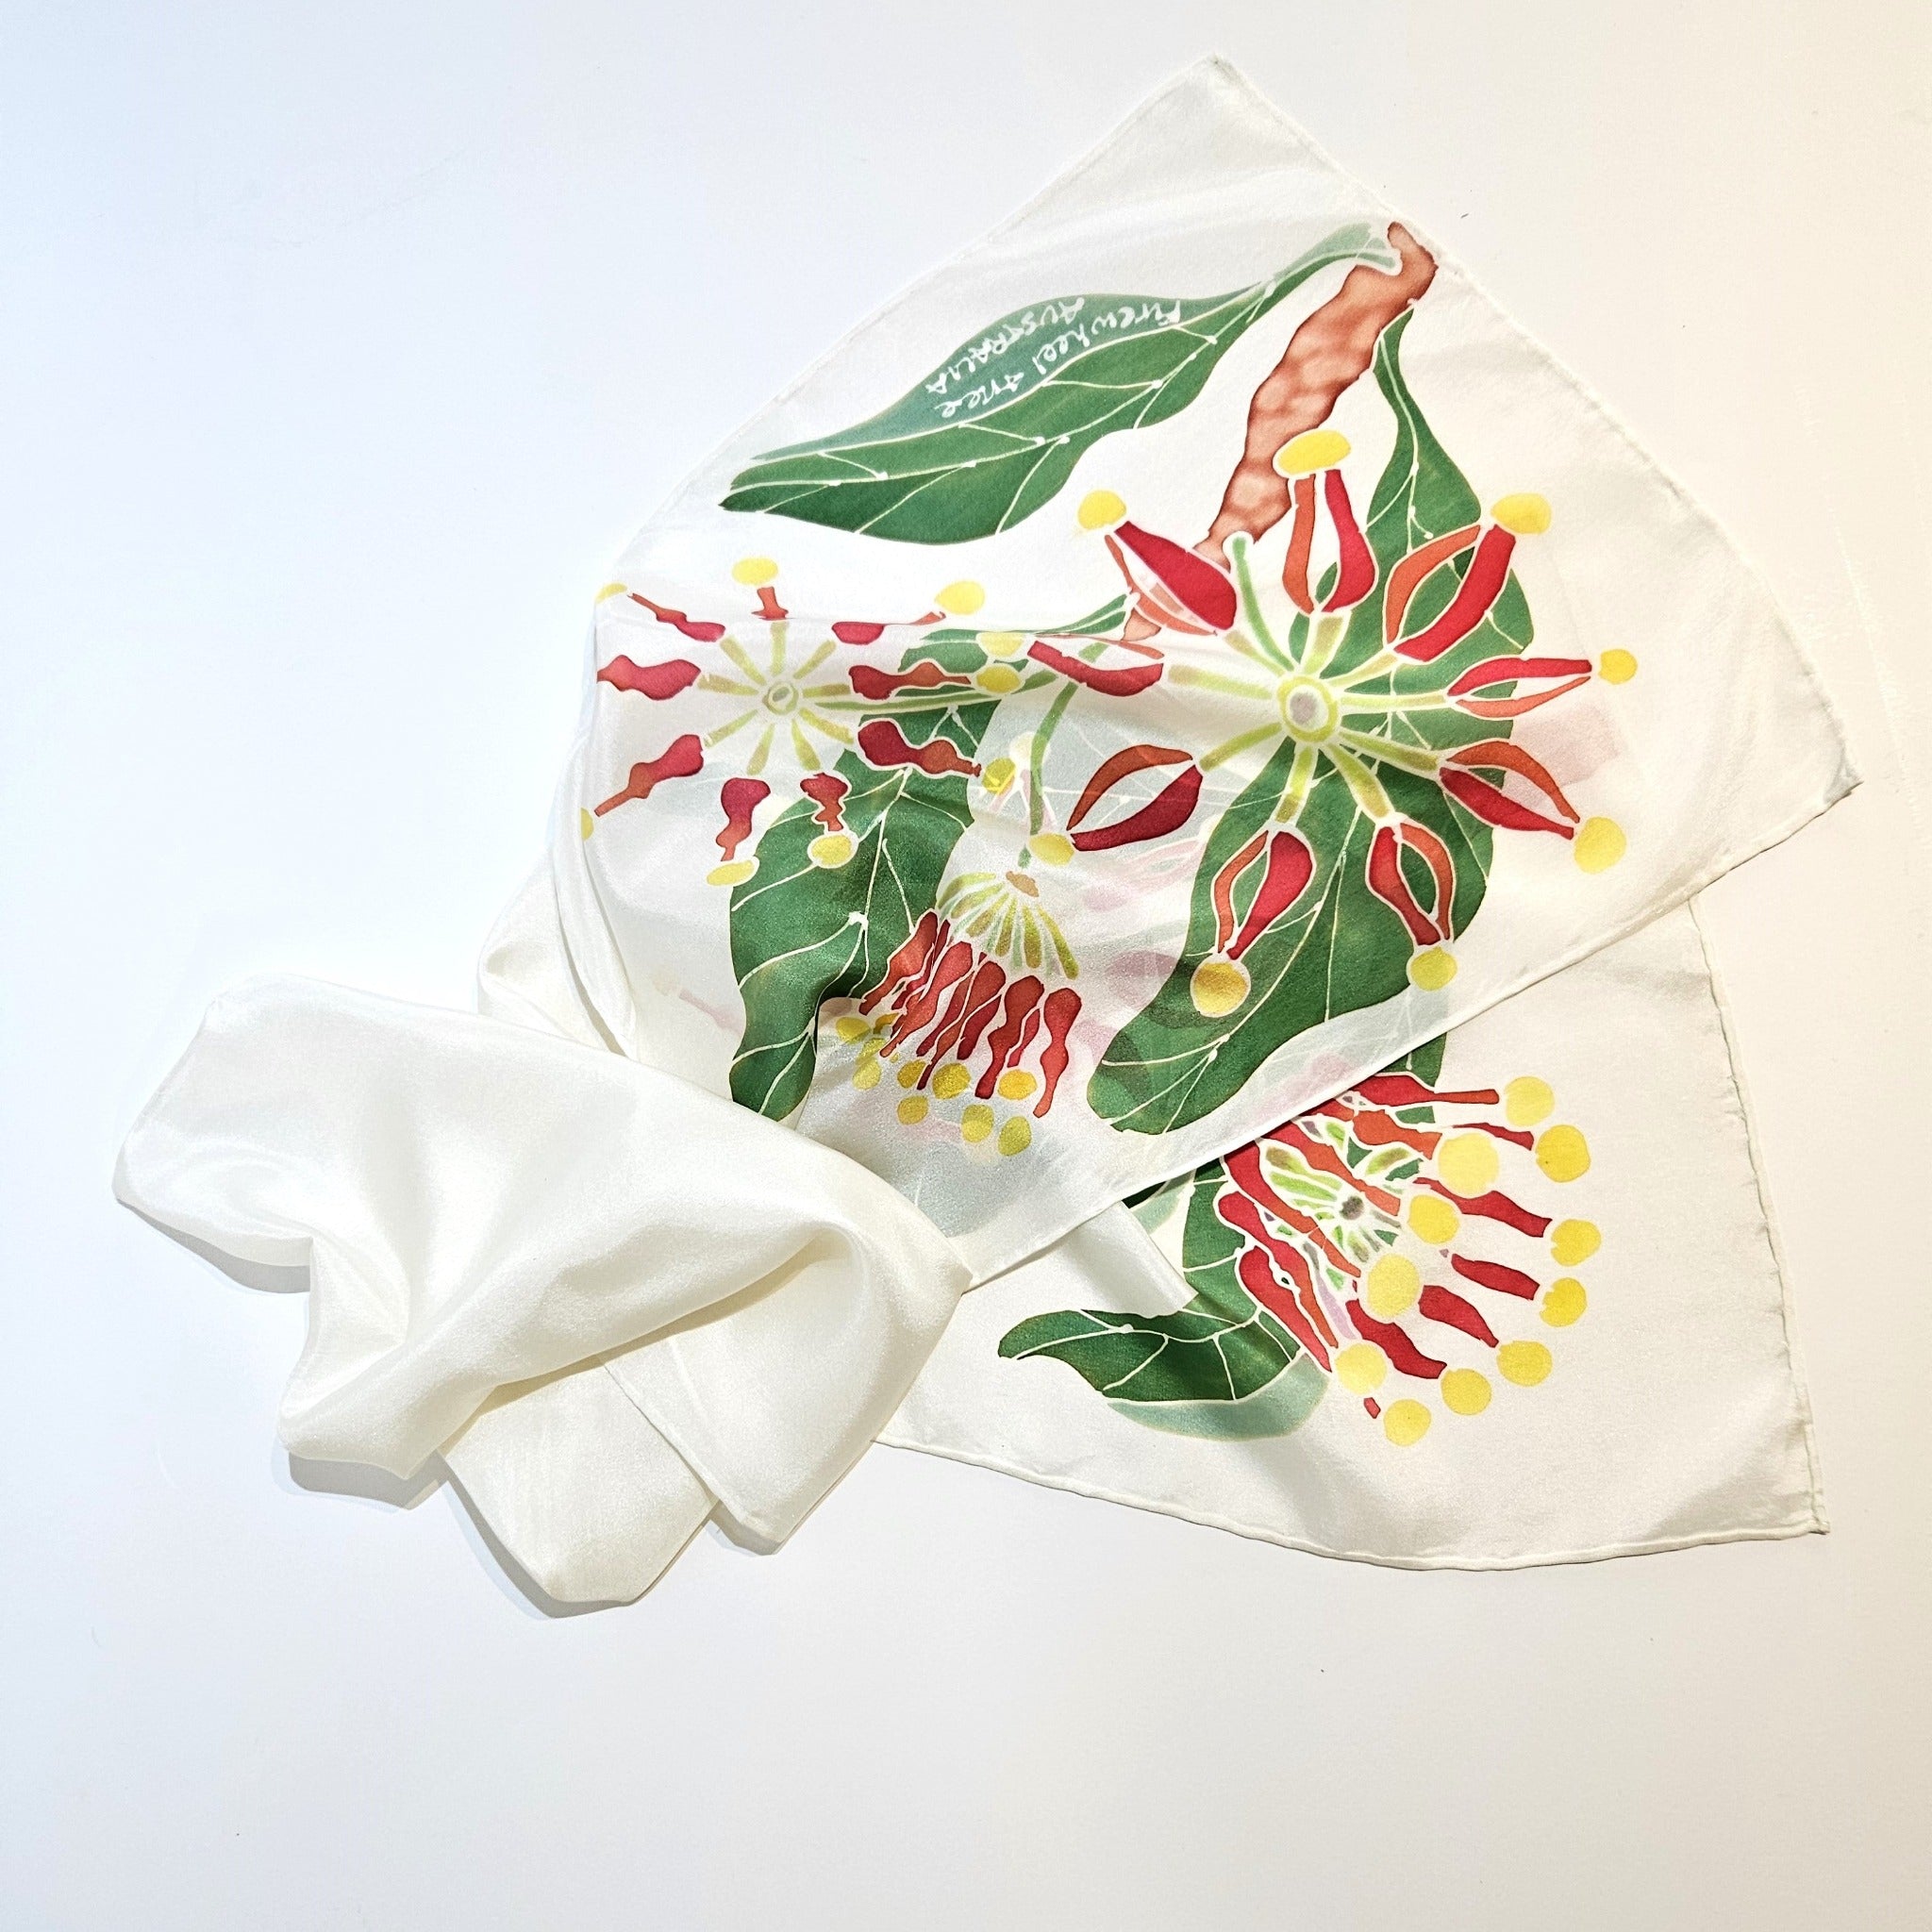 " Firewheel Tree" hand painted silk scarf handmade by Jane Hinde.